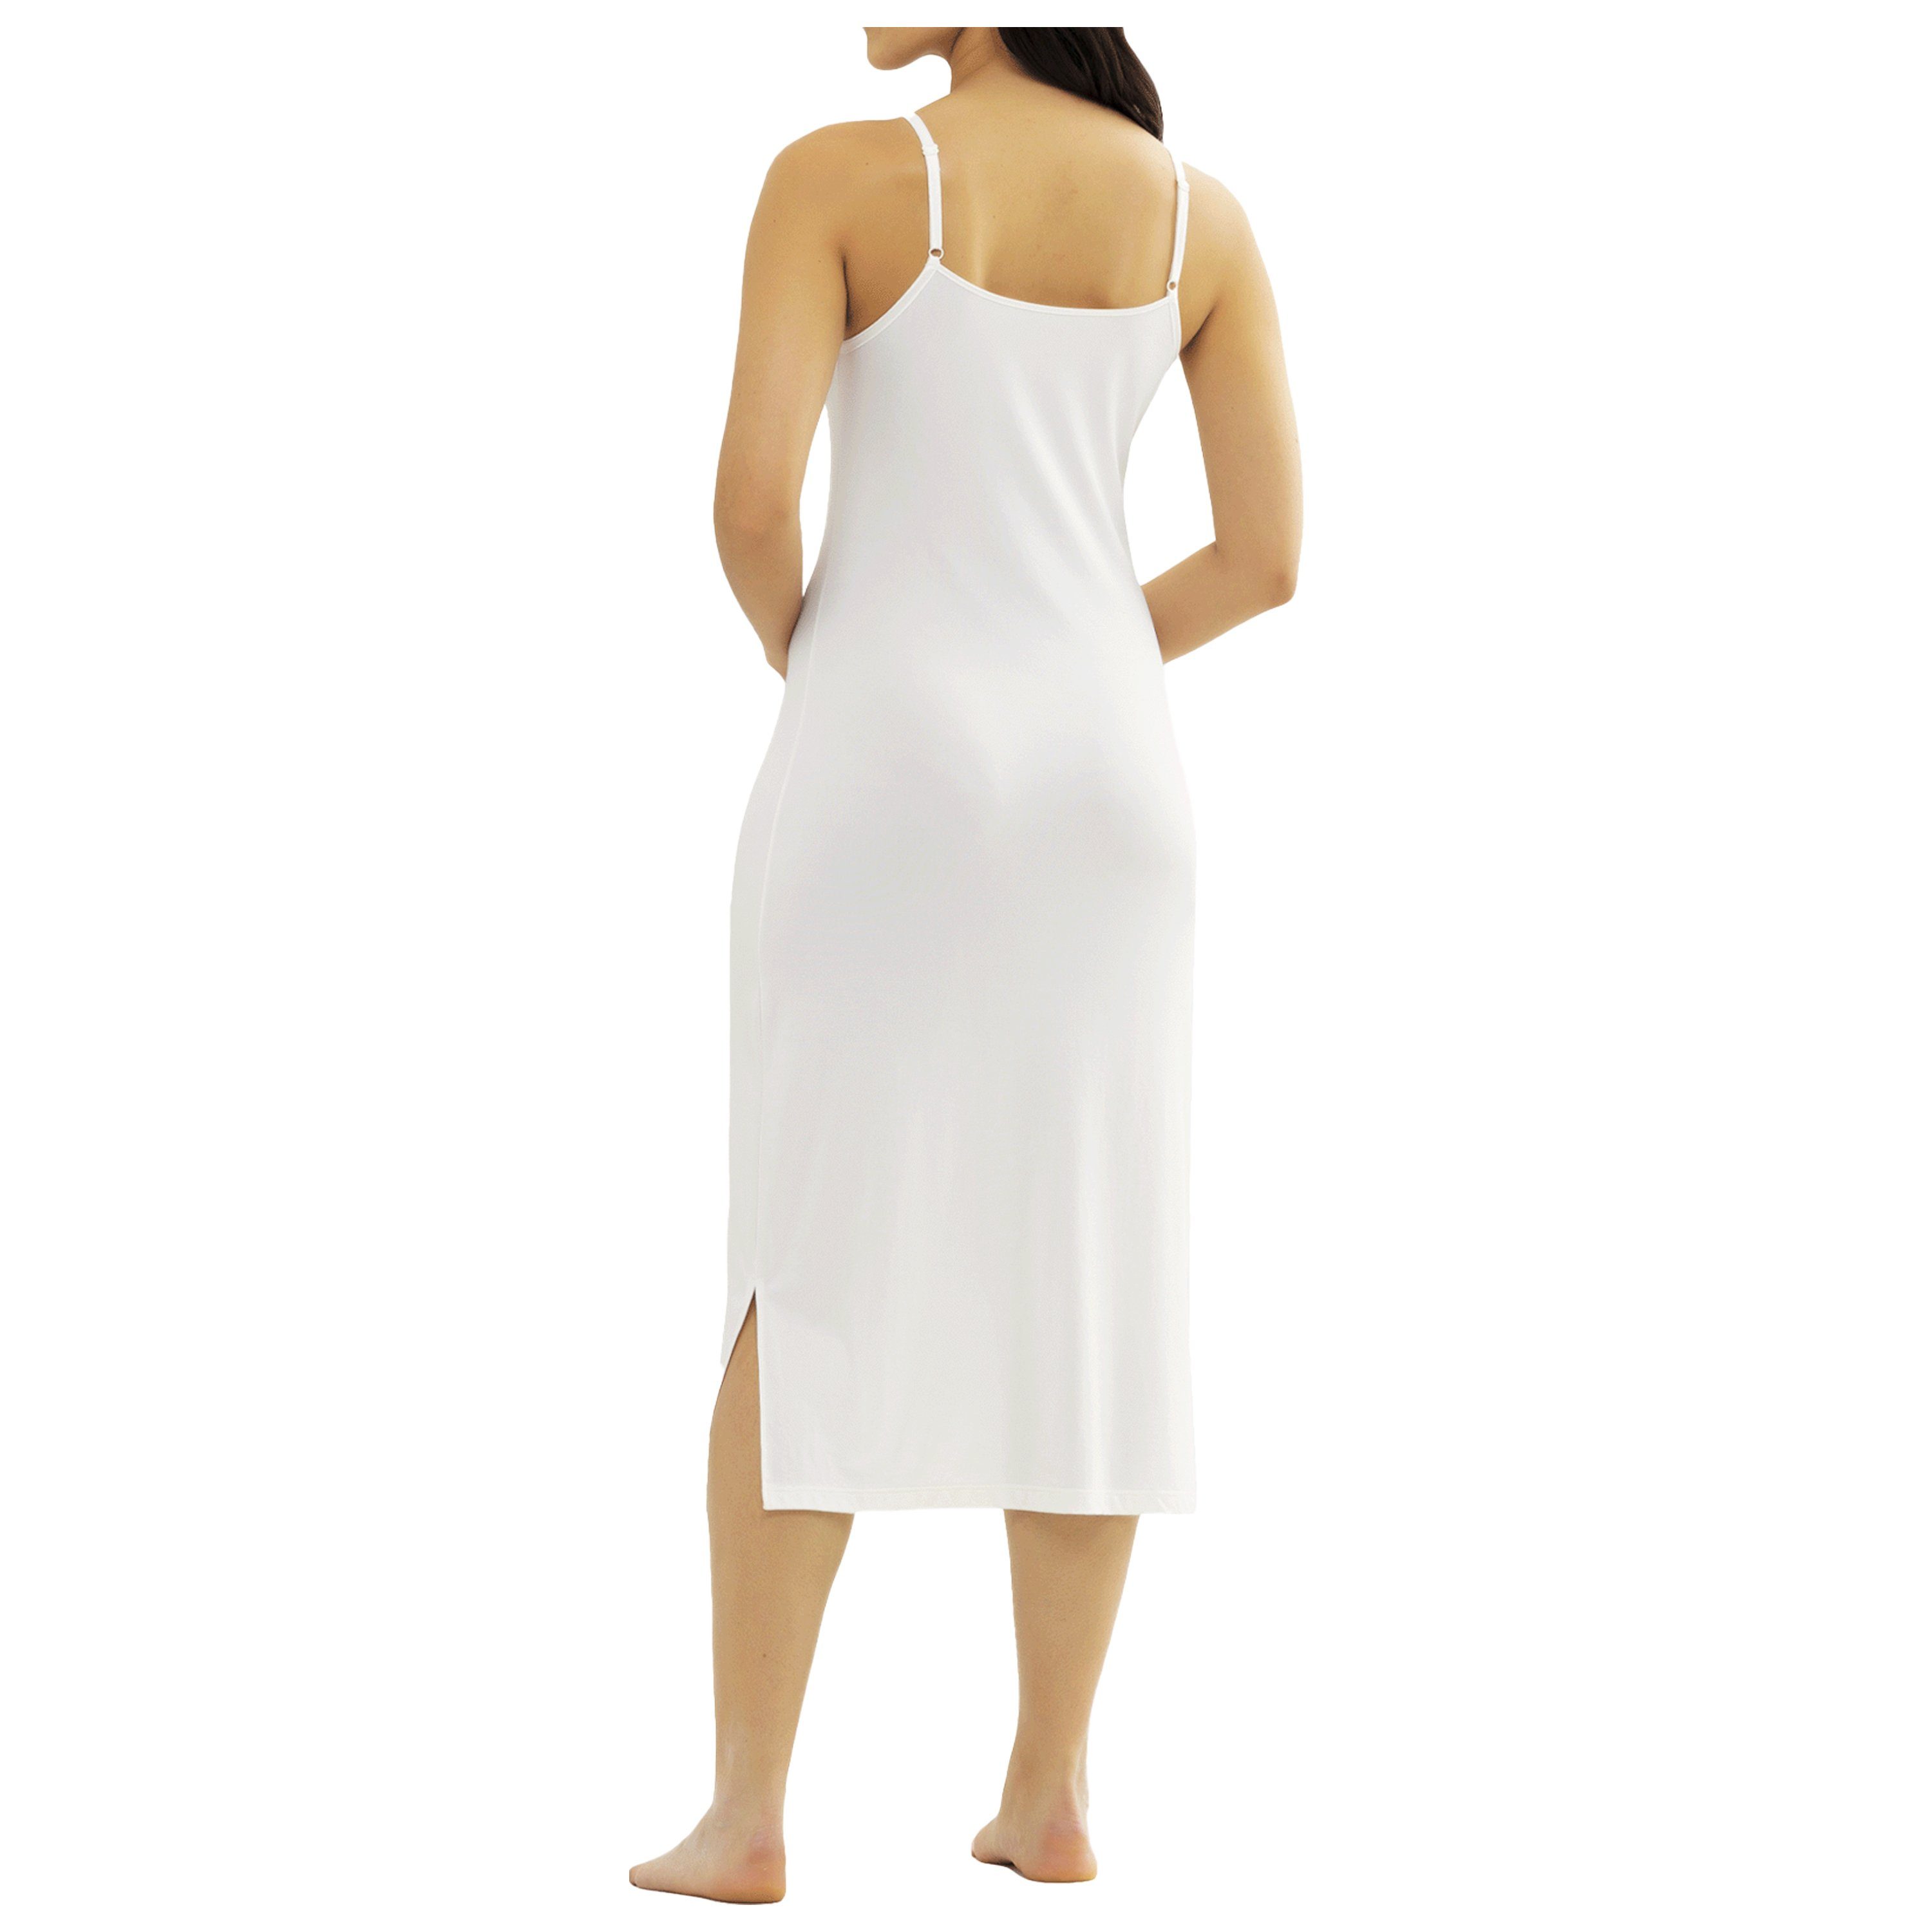 TEXEMP Unterwäsche Damen Bambus Weiß (1-tlg) Unterrock Spaghettiträger Mini Unterkleid Unterkleid Viskose Nachtkleid